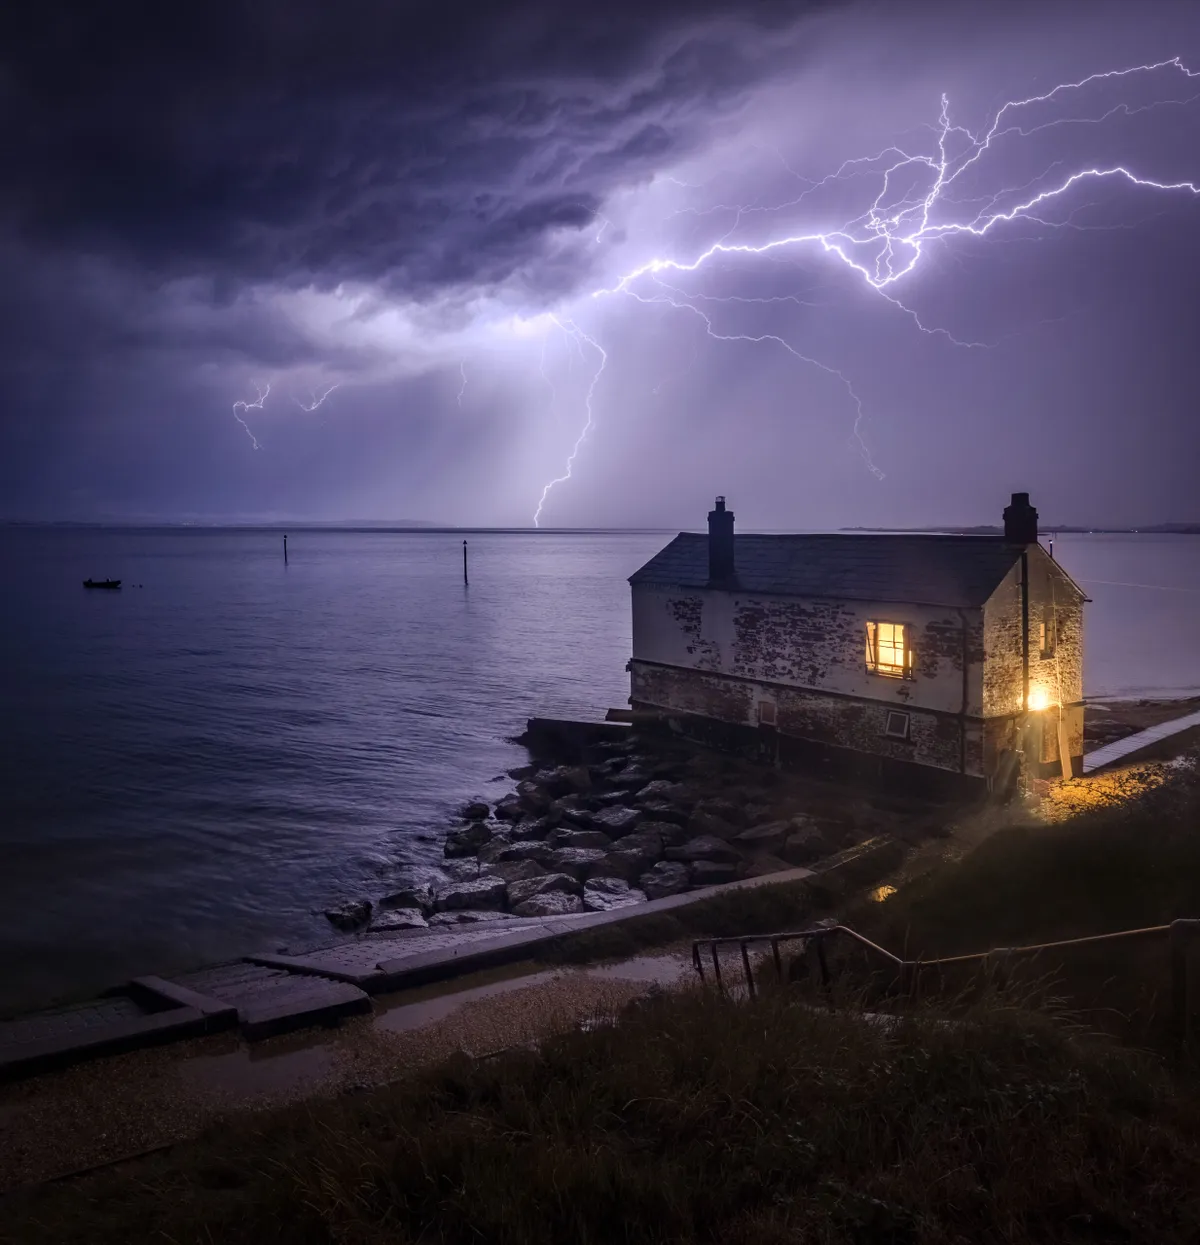 Lightning strikes the Solent